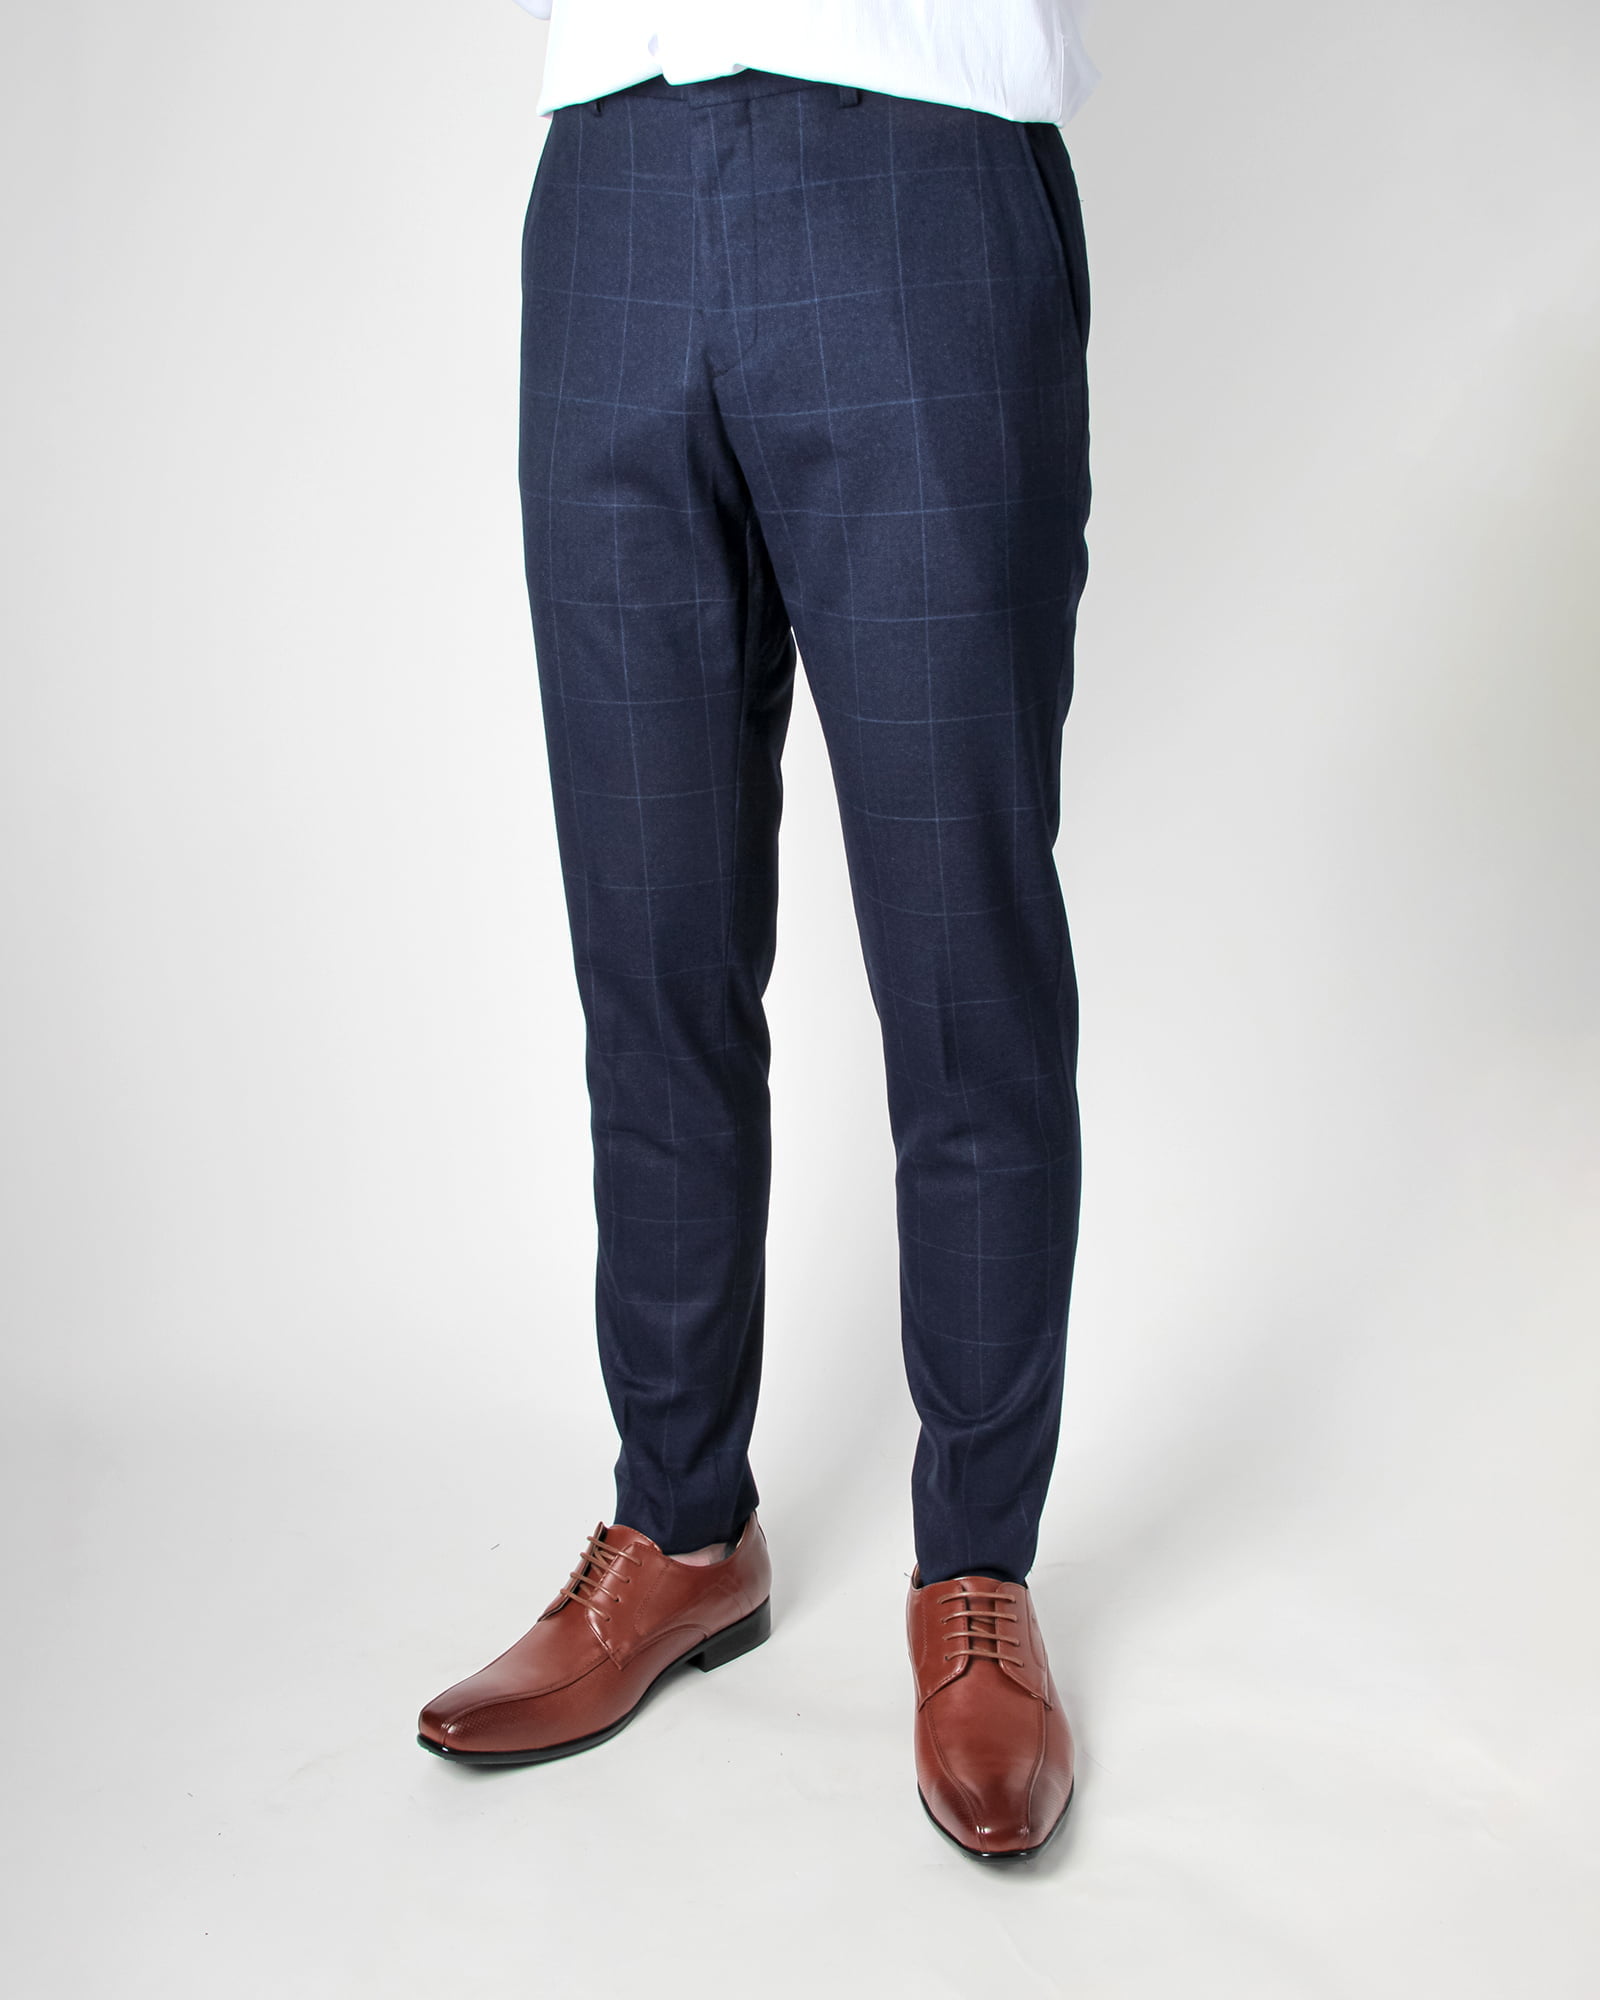 Buy Navy Blue Trousers  Pants for Men by Jack  Jones Online  Ajiocom